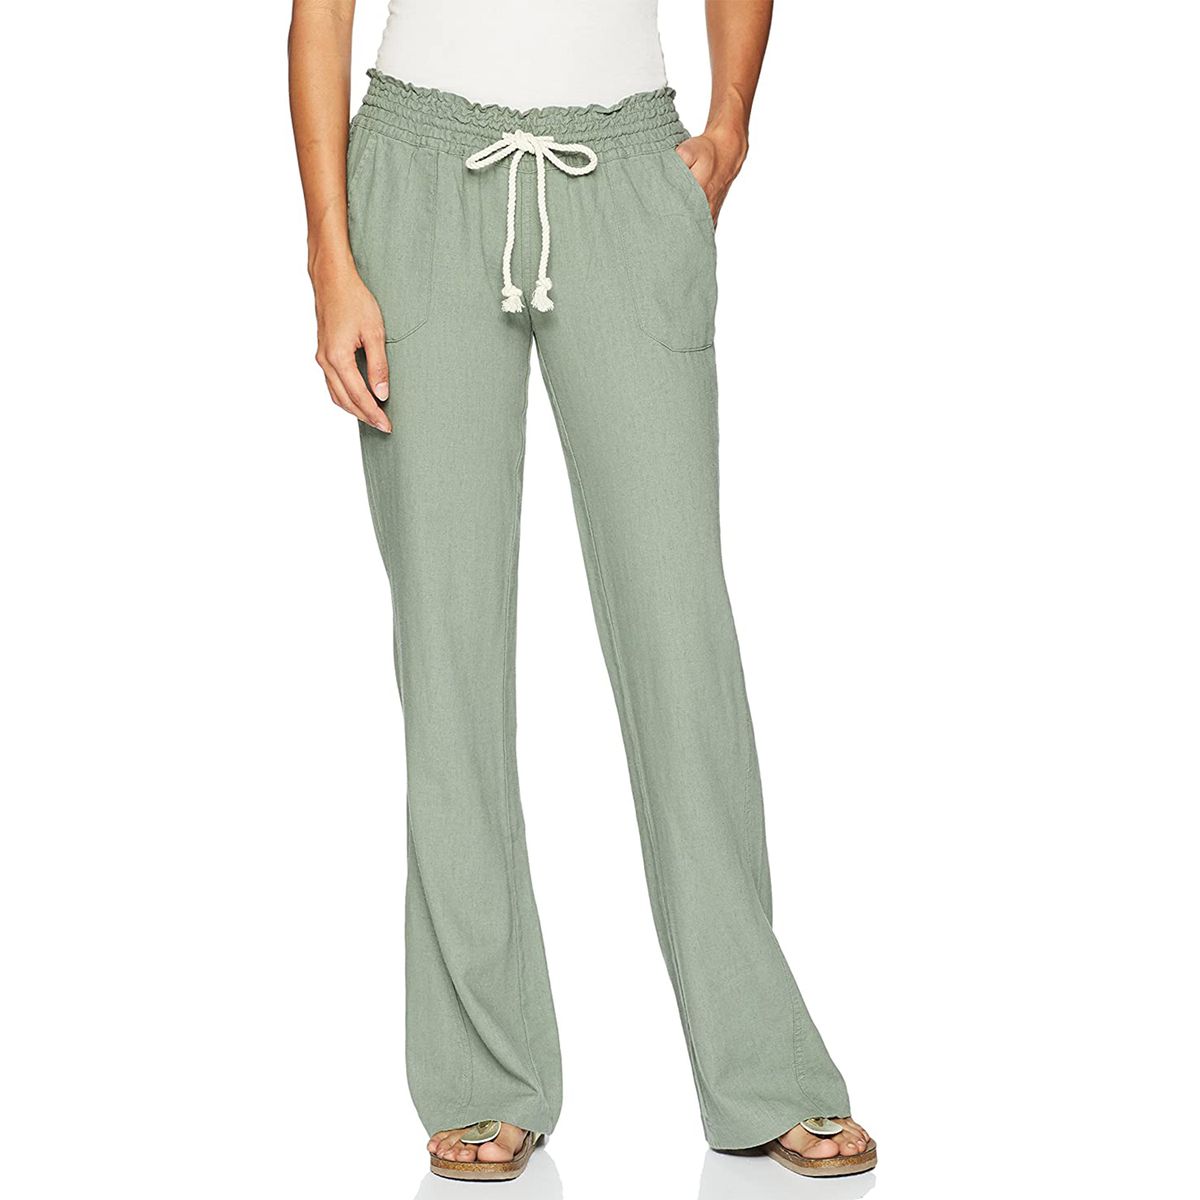 Amazon Shoppers Keep Buying the $25 Roxy Oceanside Pants | Travel ...